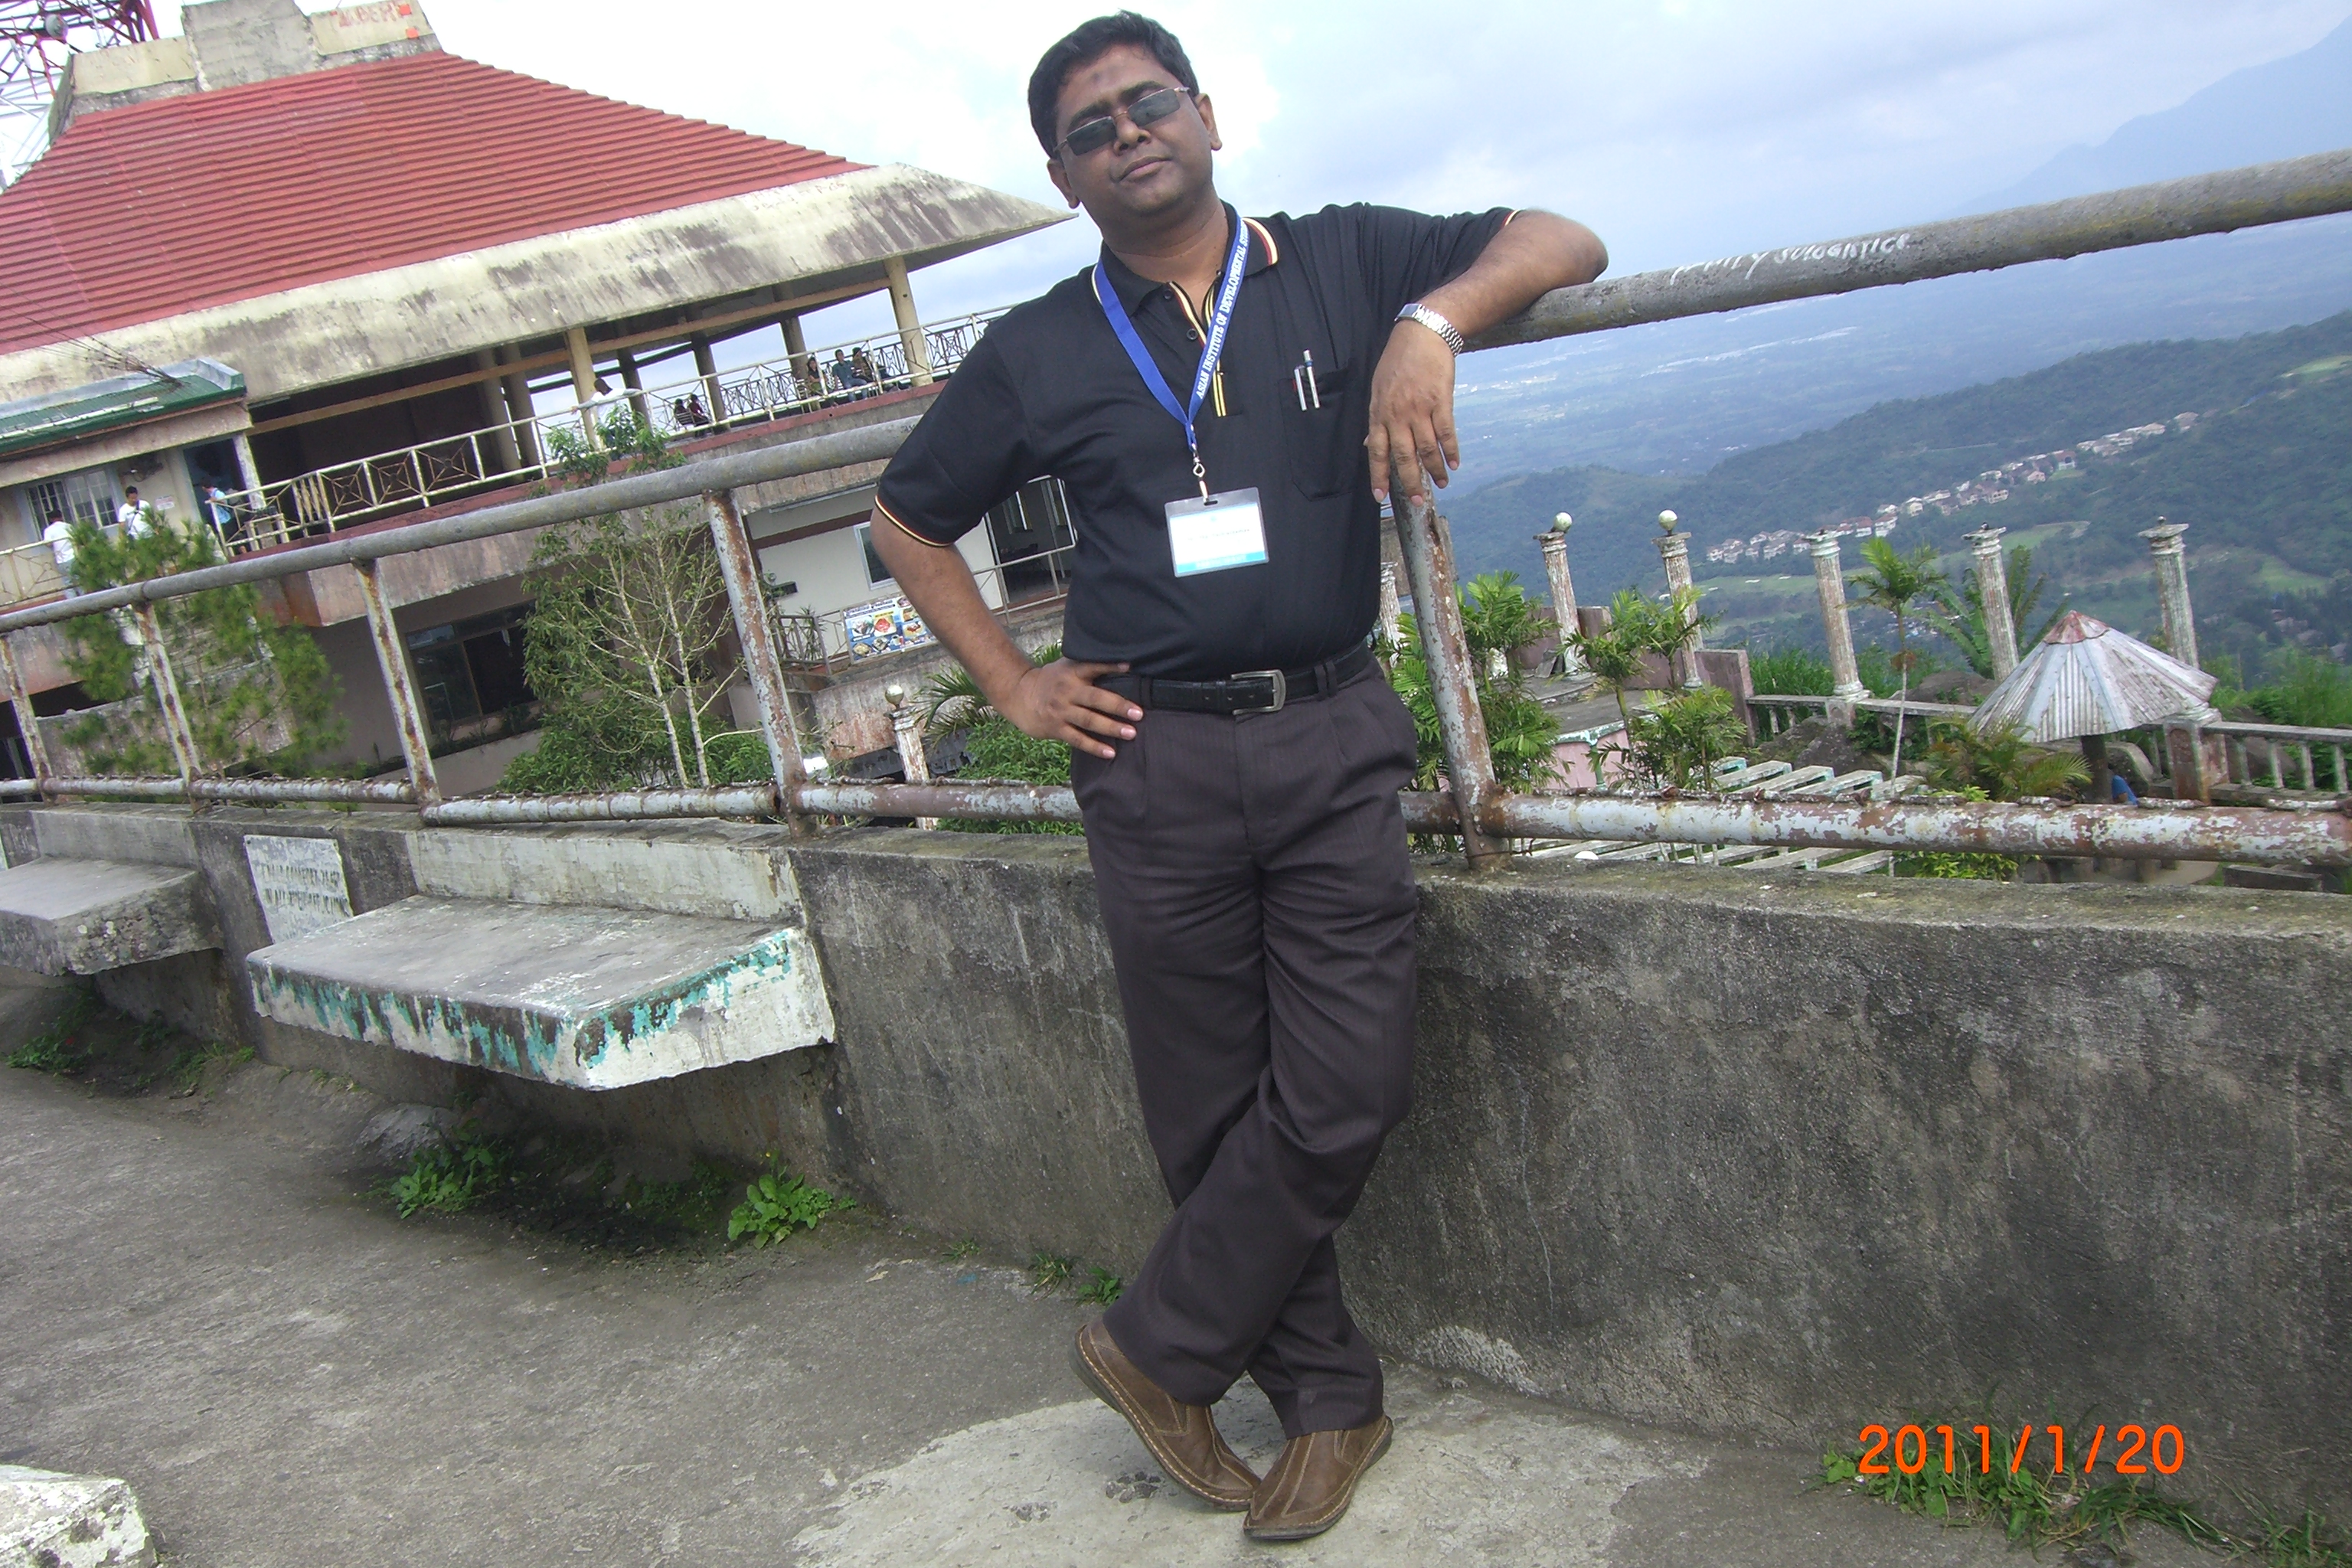 Md. Naziruzzaman Shyamal, Net work Modelling Expert at DevConsultants